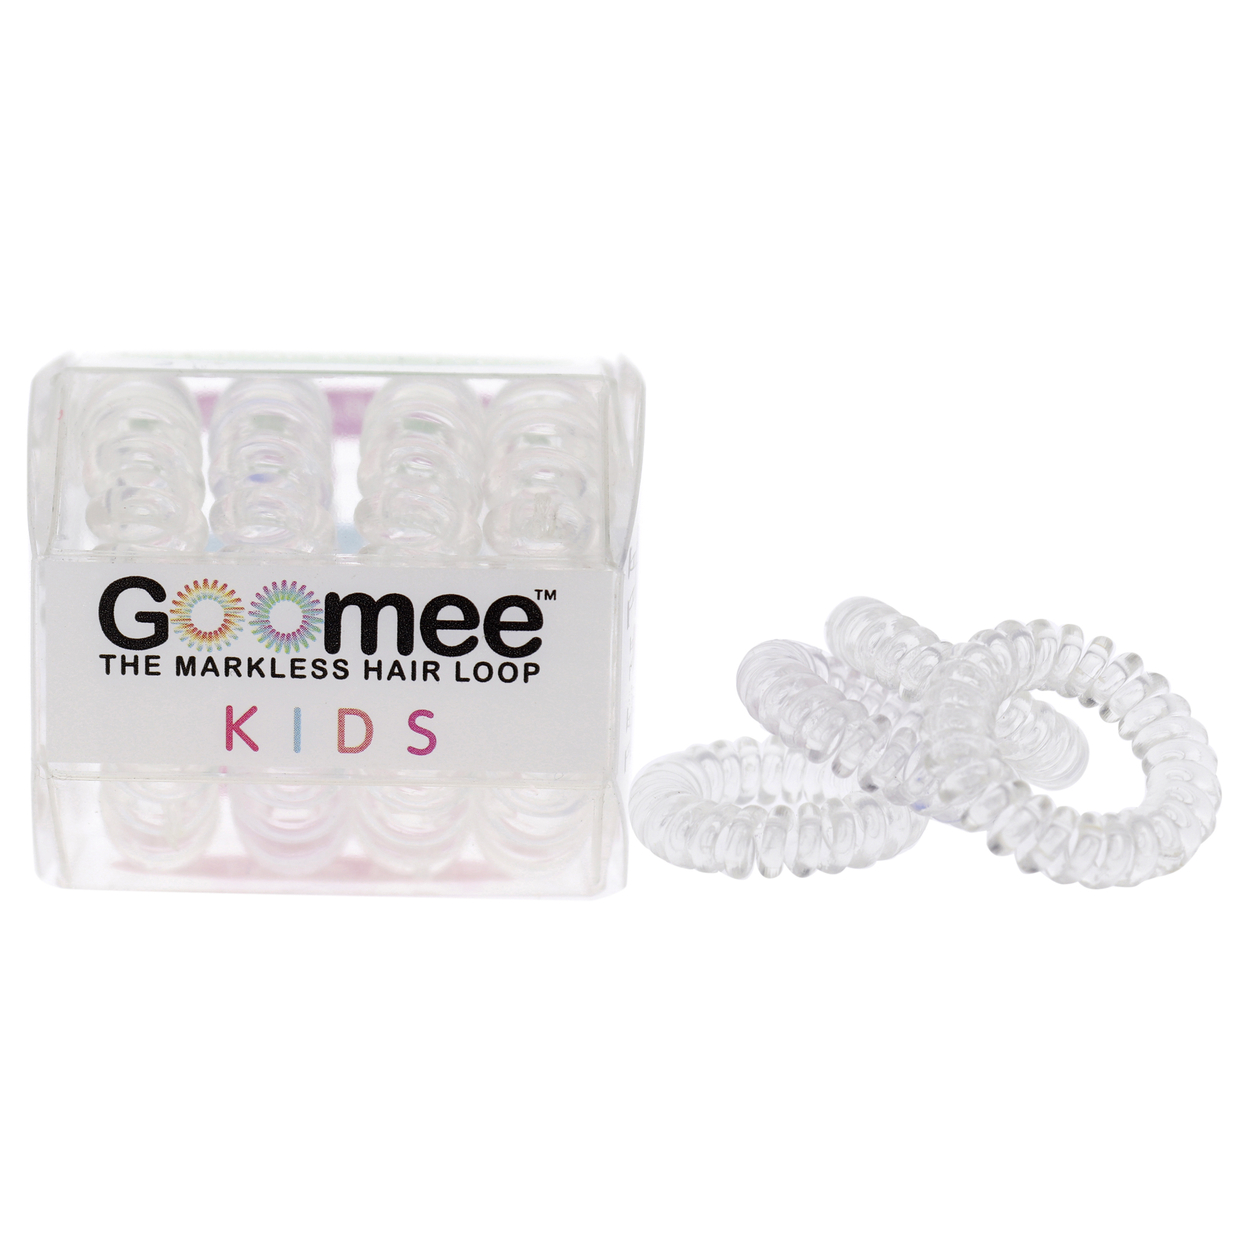 Goomee Kids The Markless Hair Loop Set - Glass Slipper Hair Tie 4 Pc